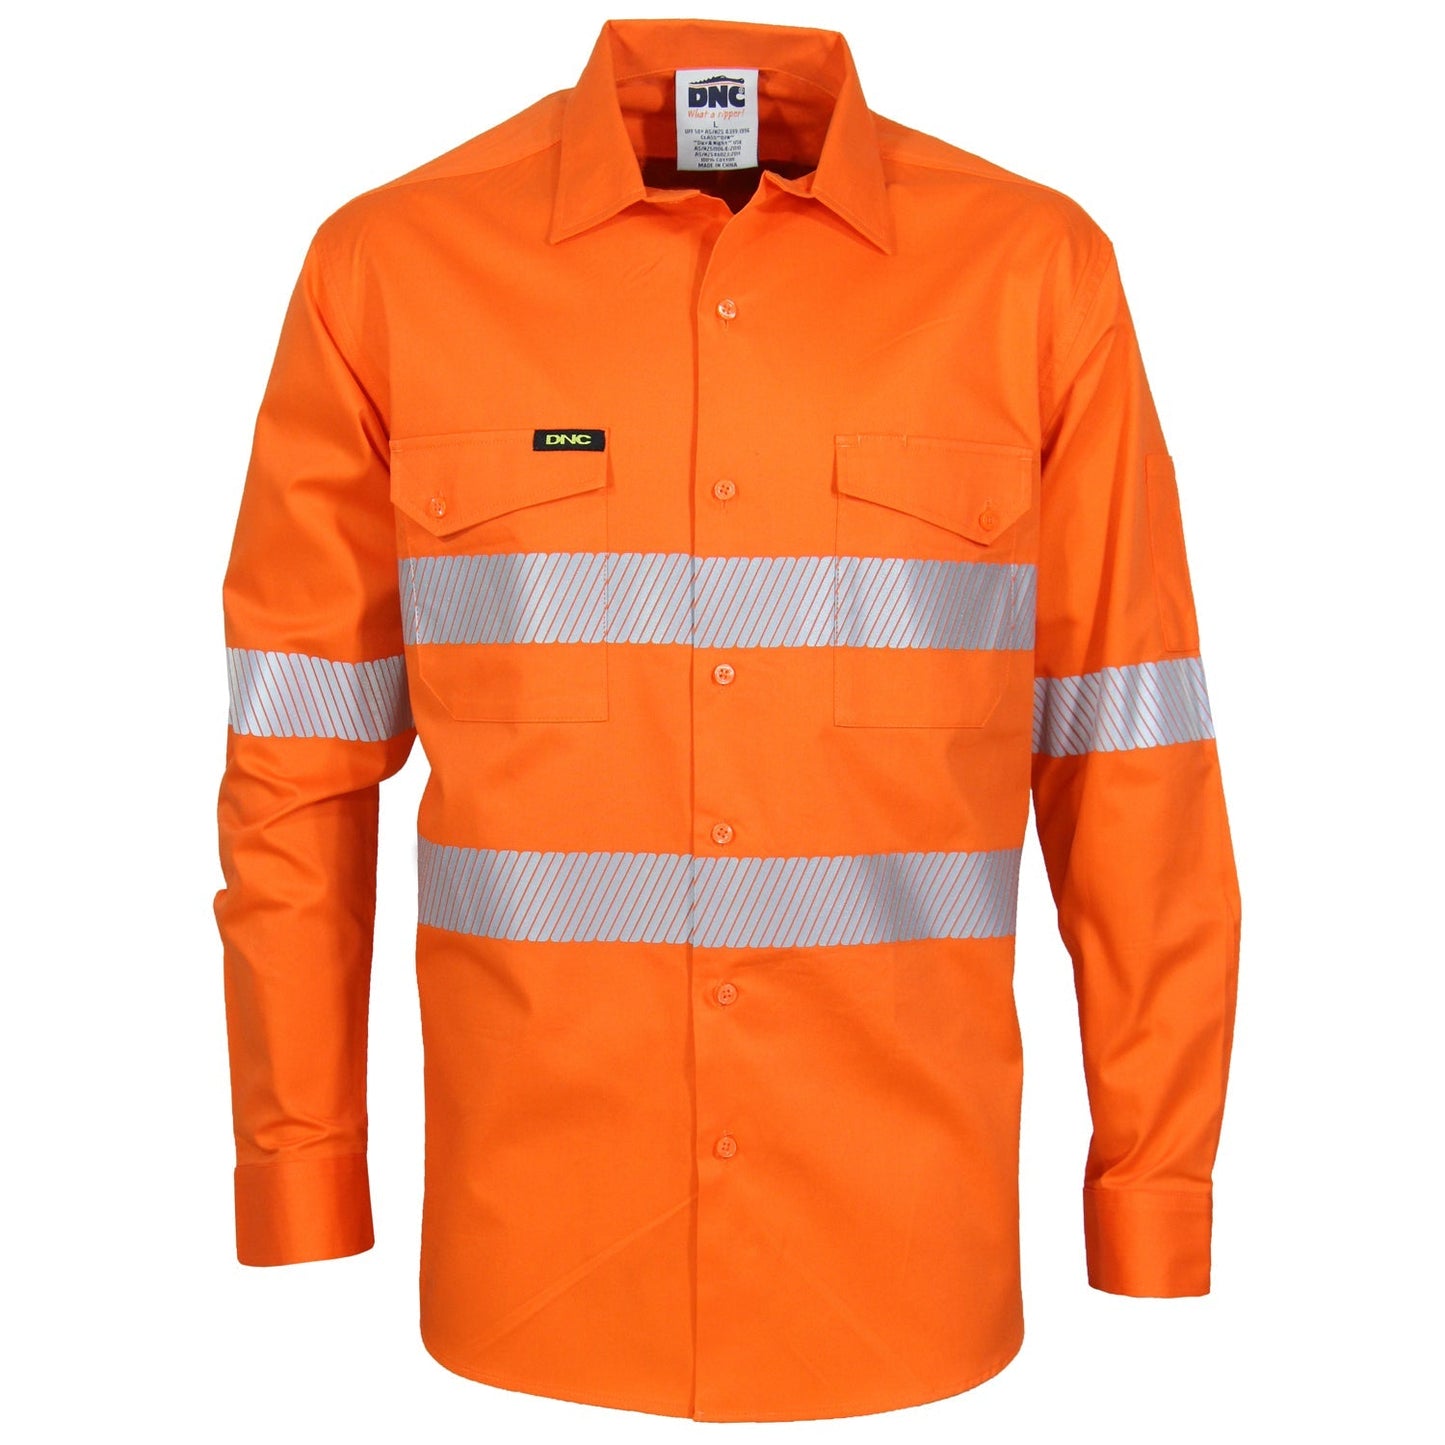 Hvs Segment Taped Coolight Sht - 3647 Work Wear DNC Workwear Orange XXS 